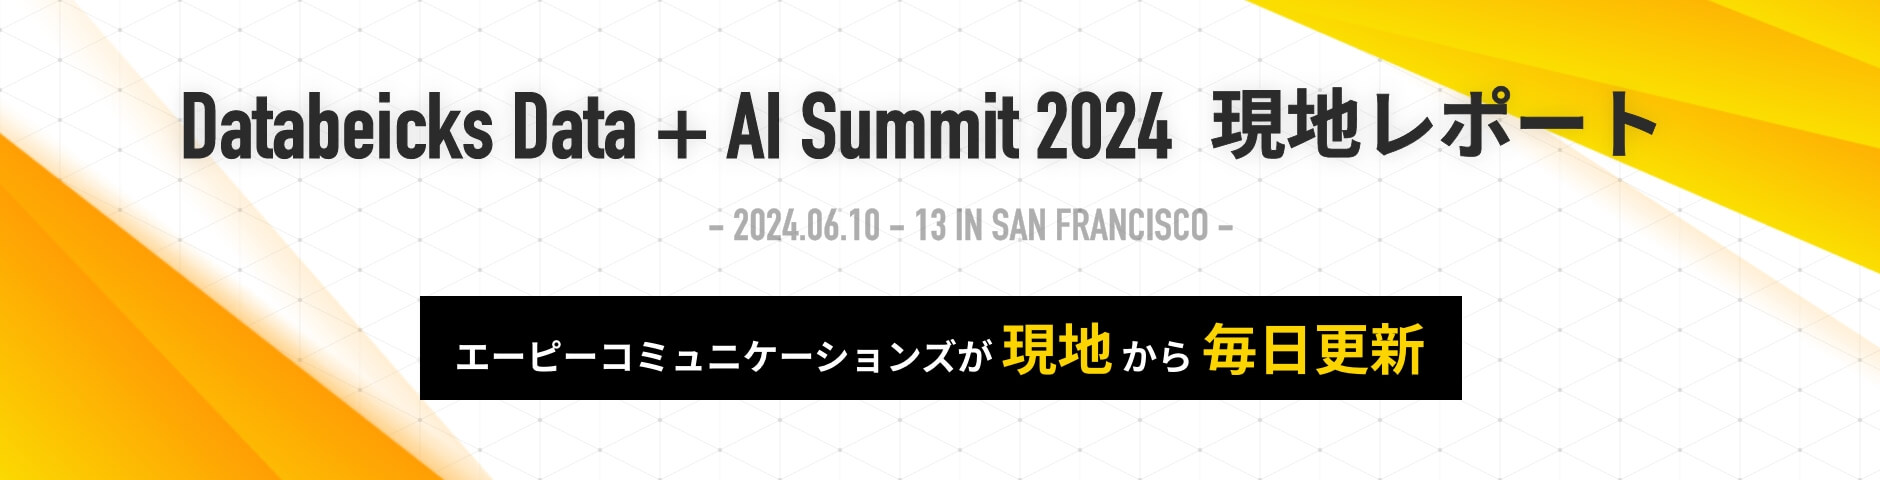 Data+AI Summit 2024 現地レポート